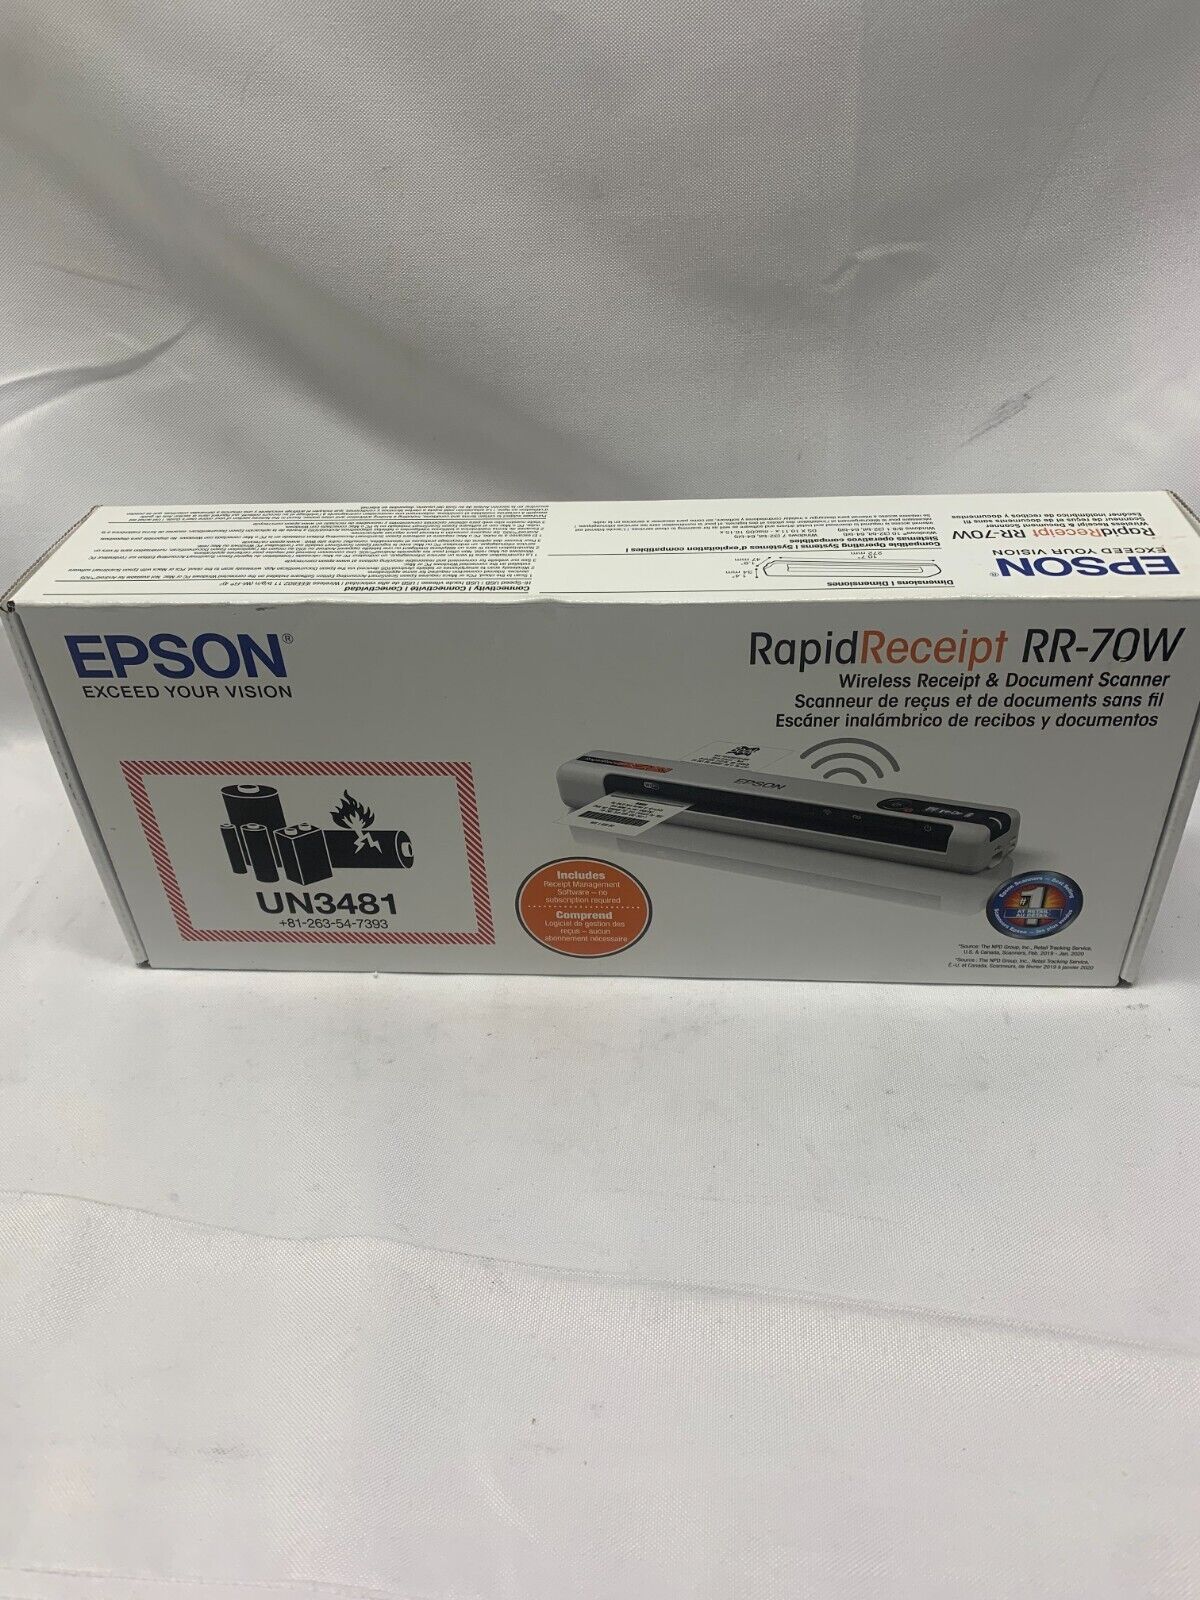 Epson RapidReceipt RR-70W Wireless Mobile Receipt and  Document Scanner *New